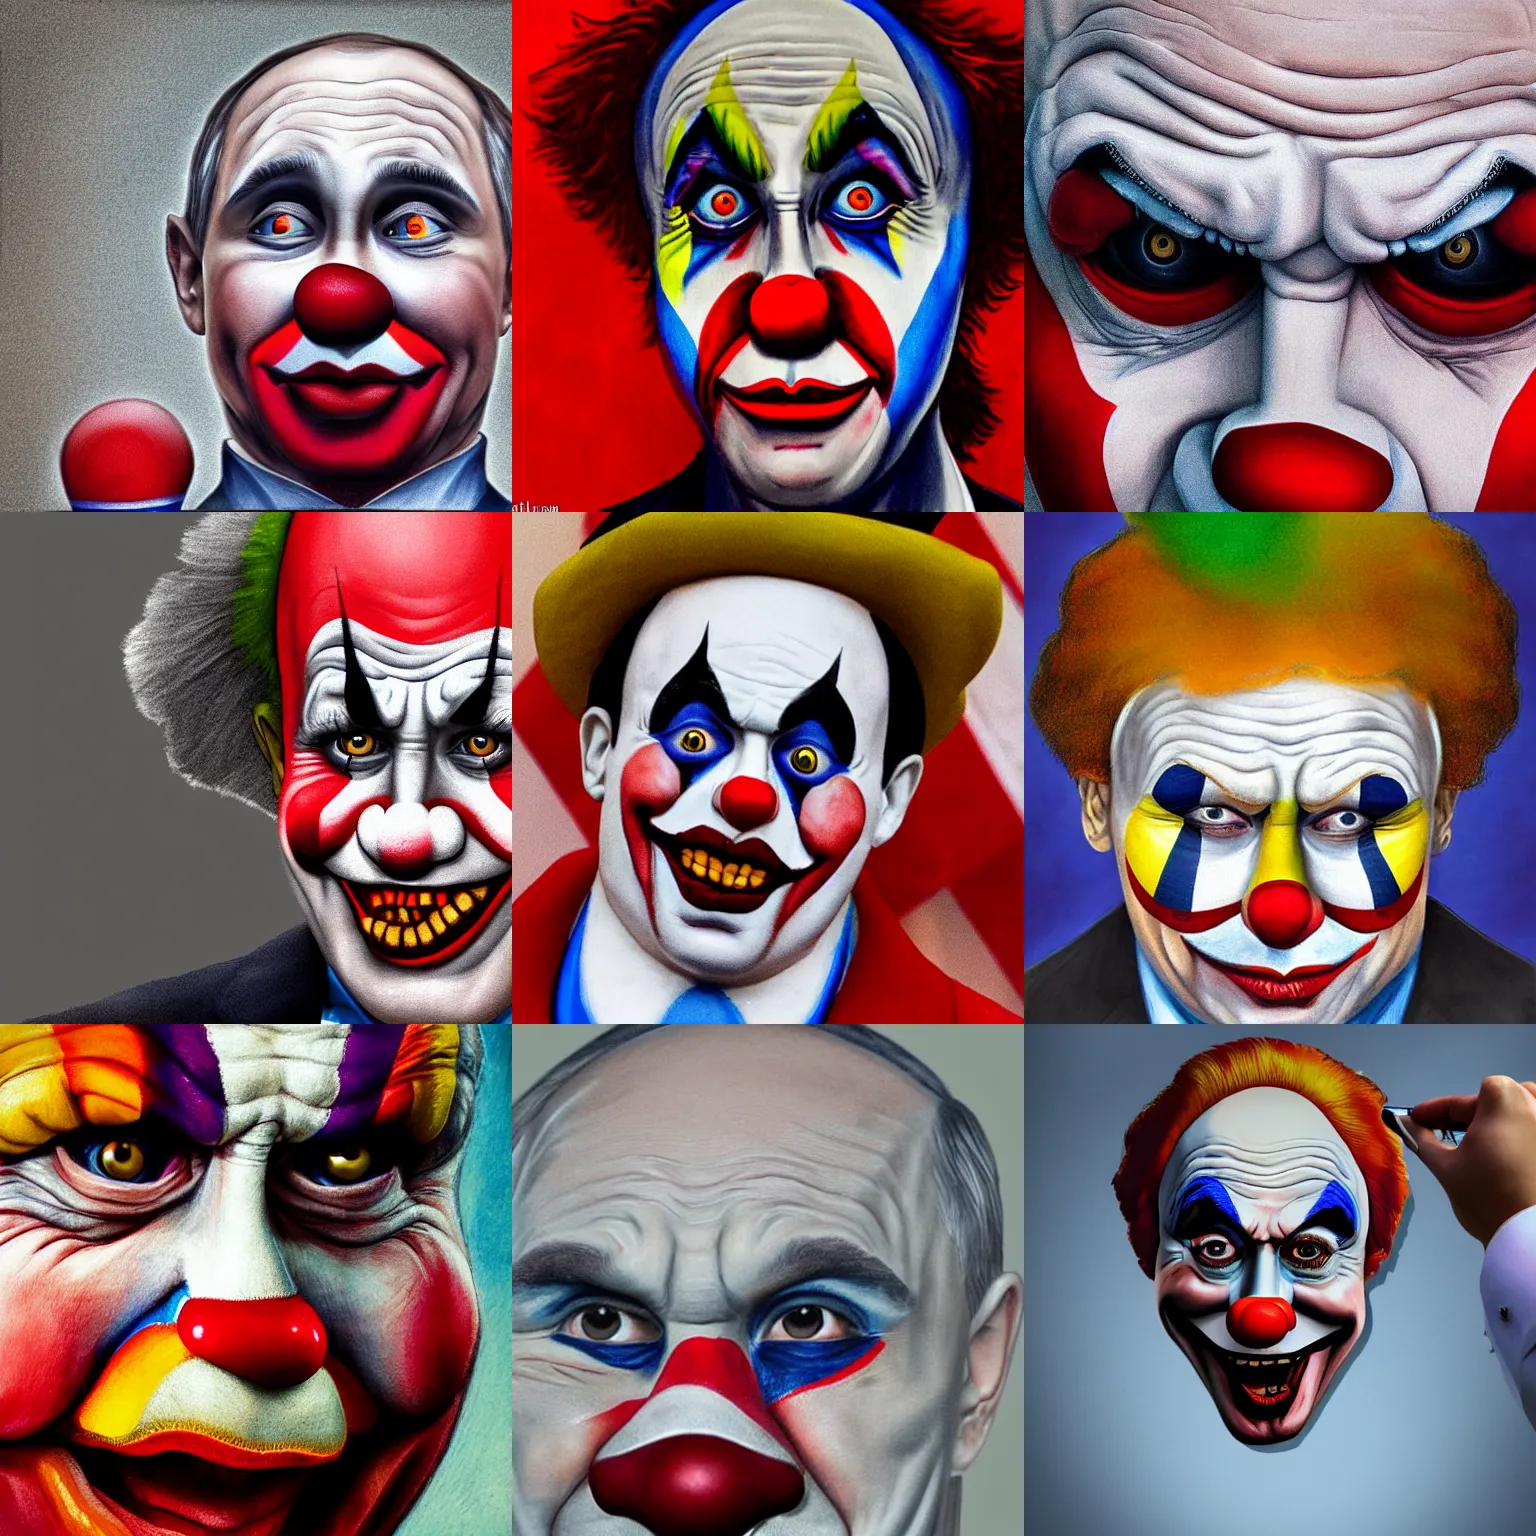 Prompt: a selfie of putin clown, hyper realistic, sharp focus, depth of field, hyper detailed